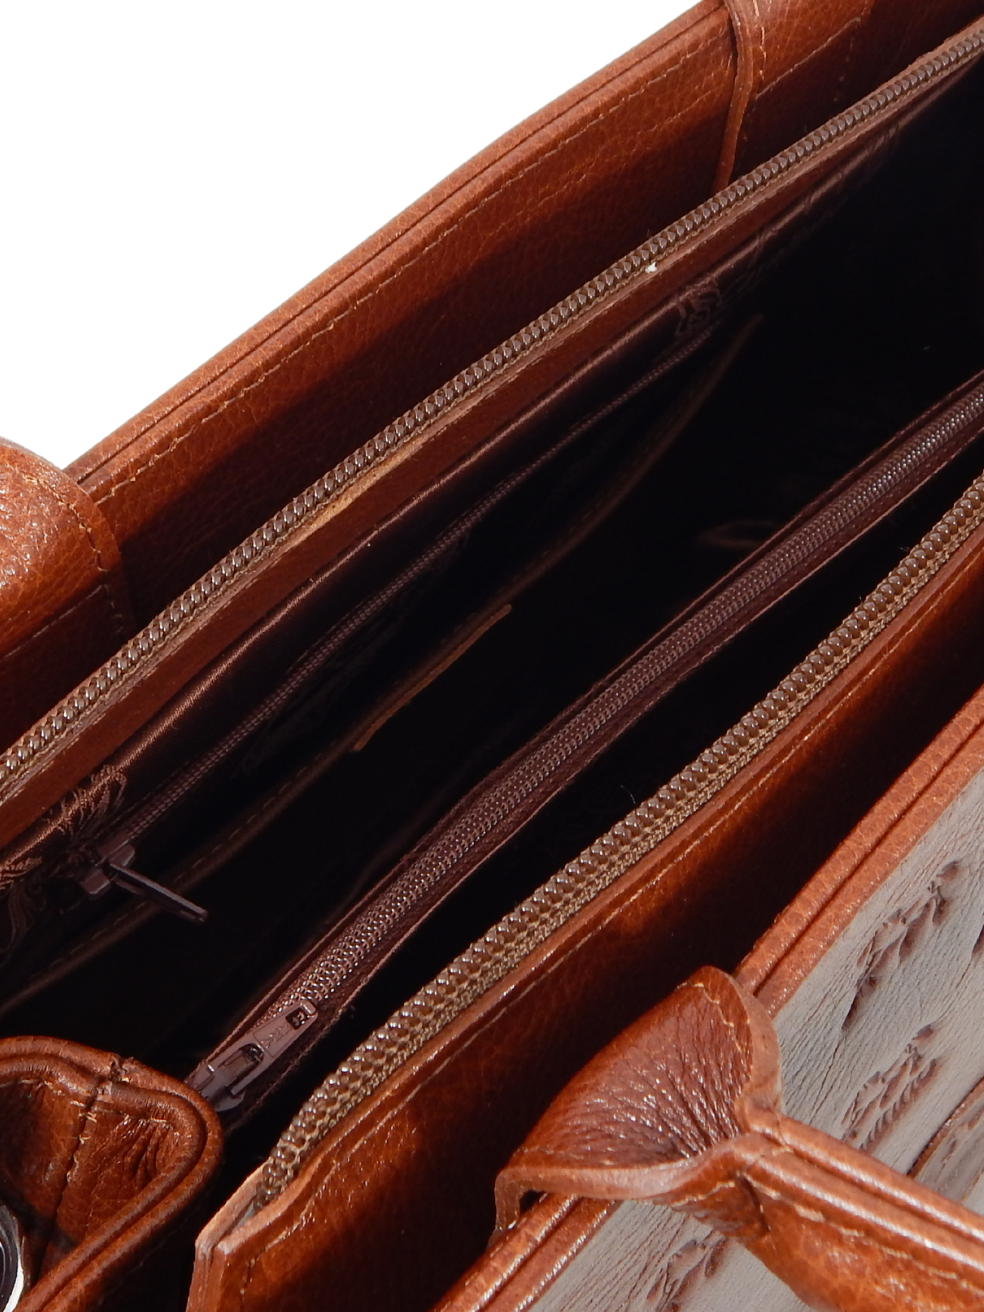 Cavalinho Signature Leather Handbag SKU 18090145.13 #color_saddlebrown